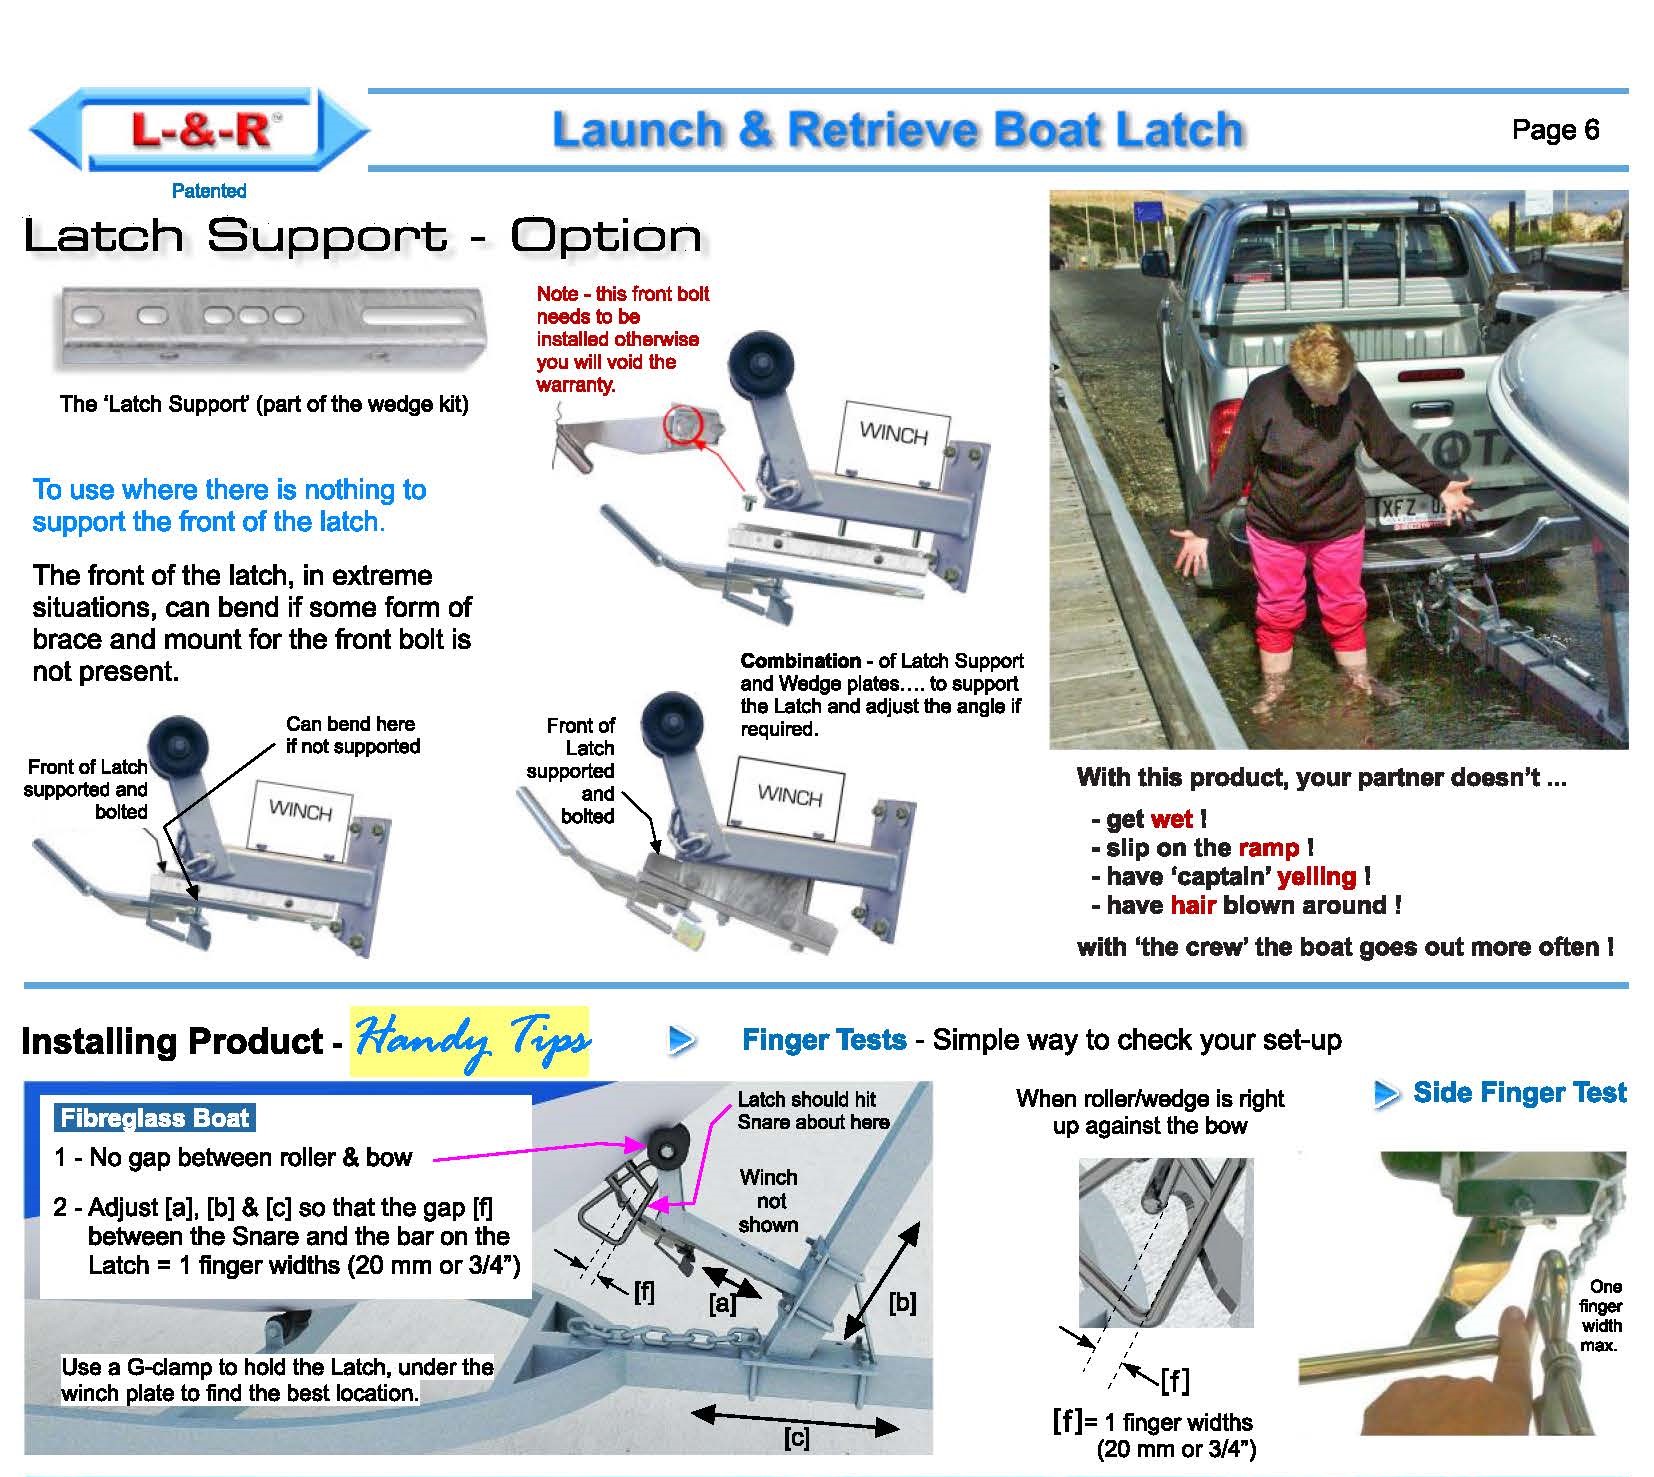 Release and Retrieve Boat Latch